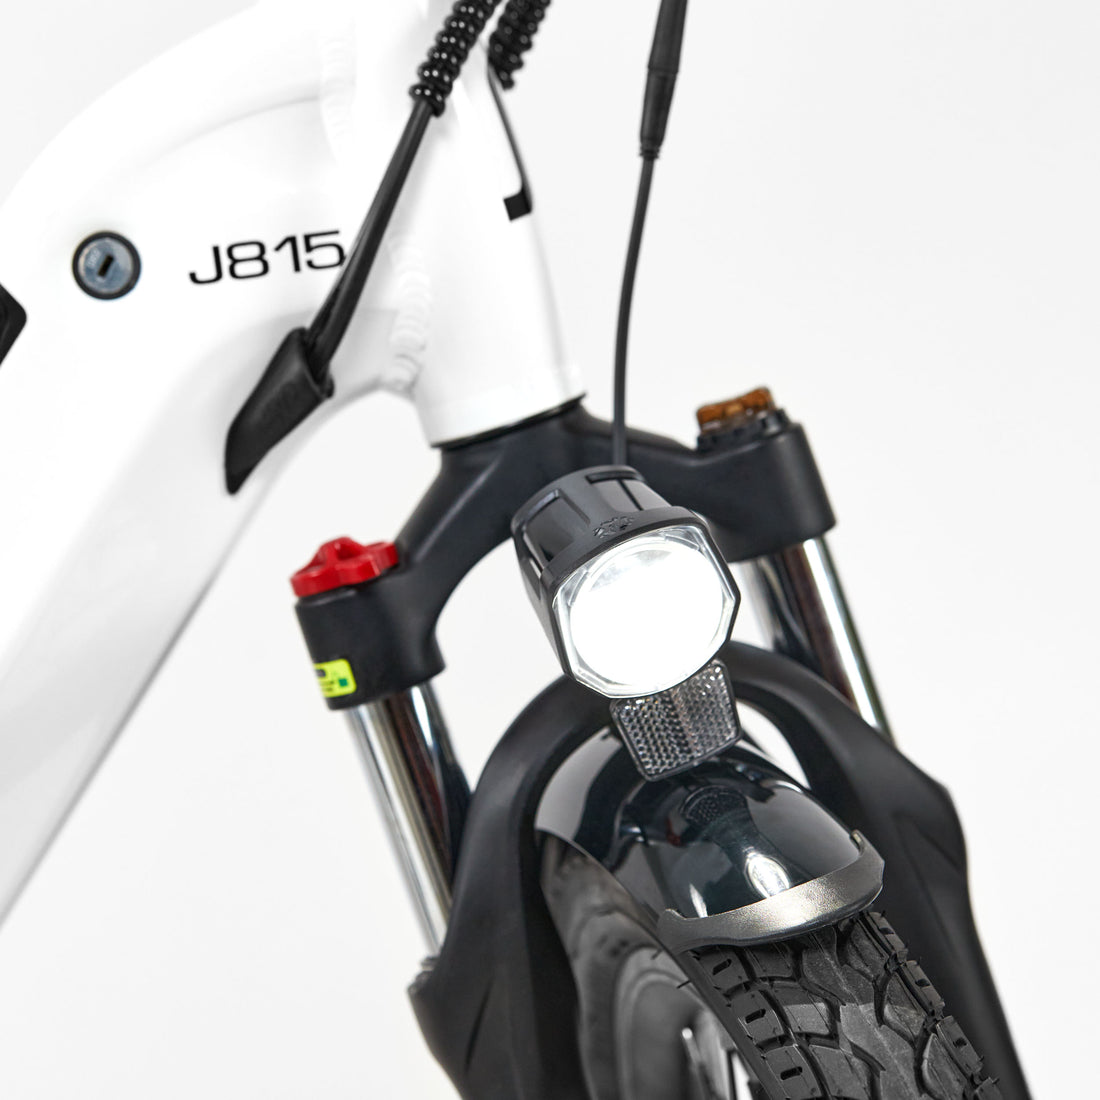 J815 E-bike